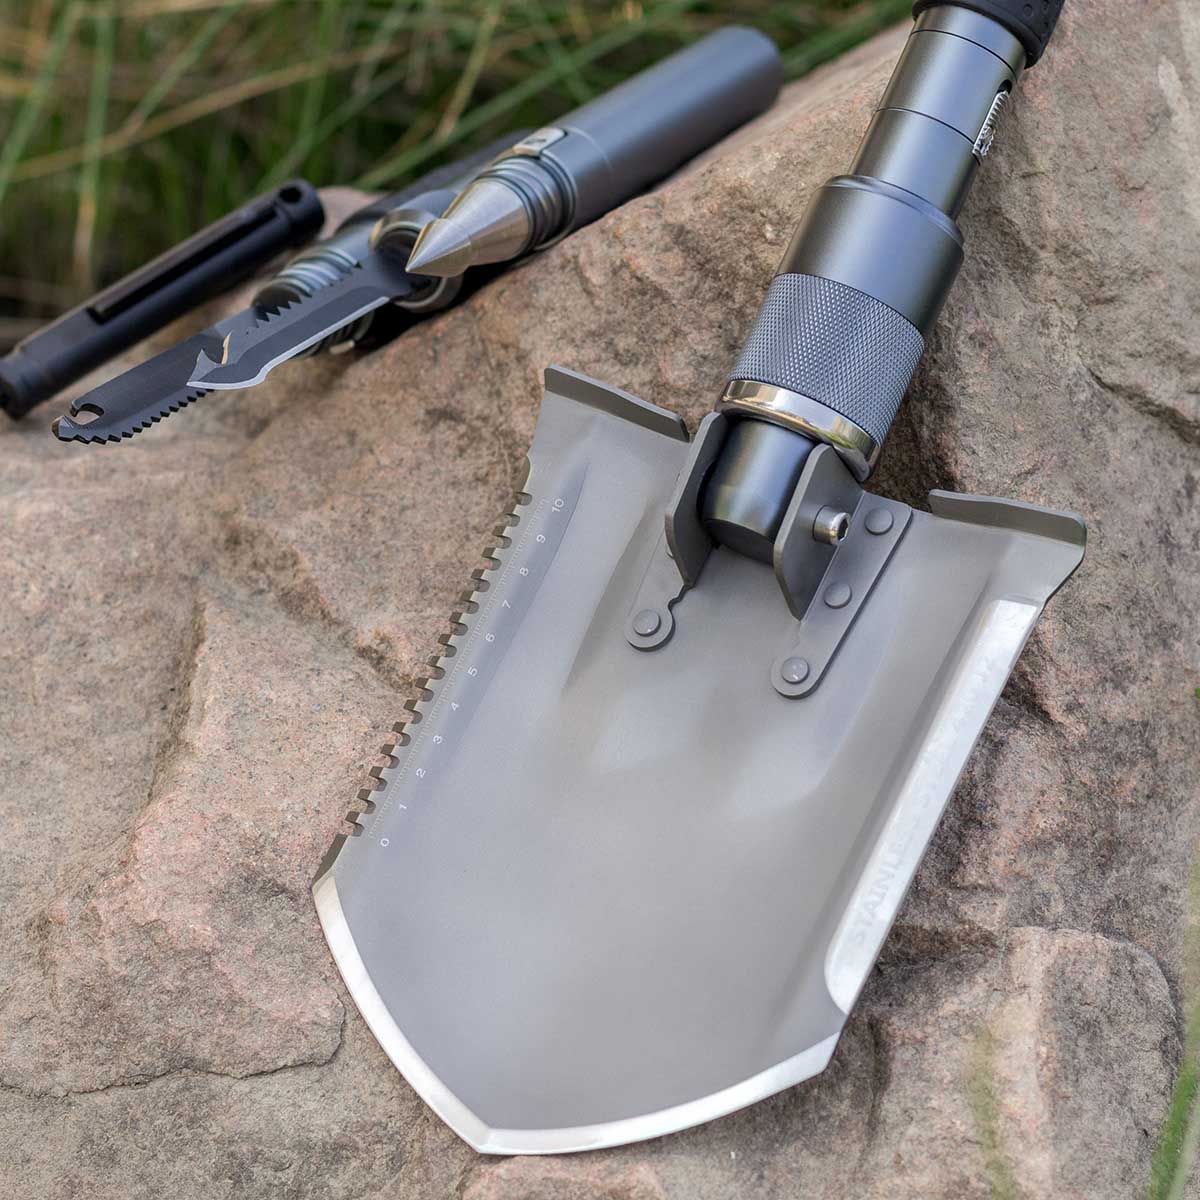 Multifunctional 38-inch Assembling Survival Shovel Tool Kit for Fishing, Hunting, Camping